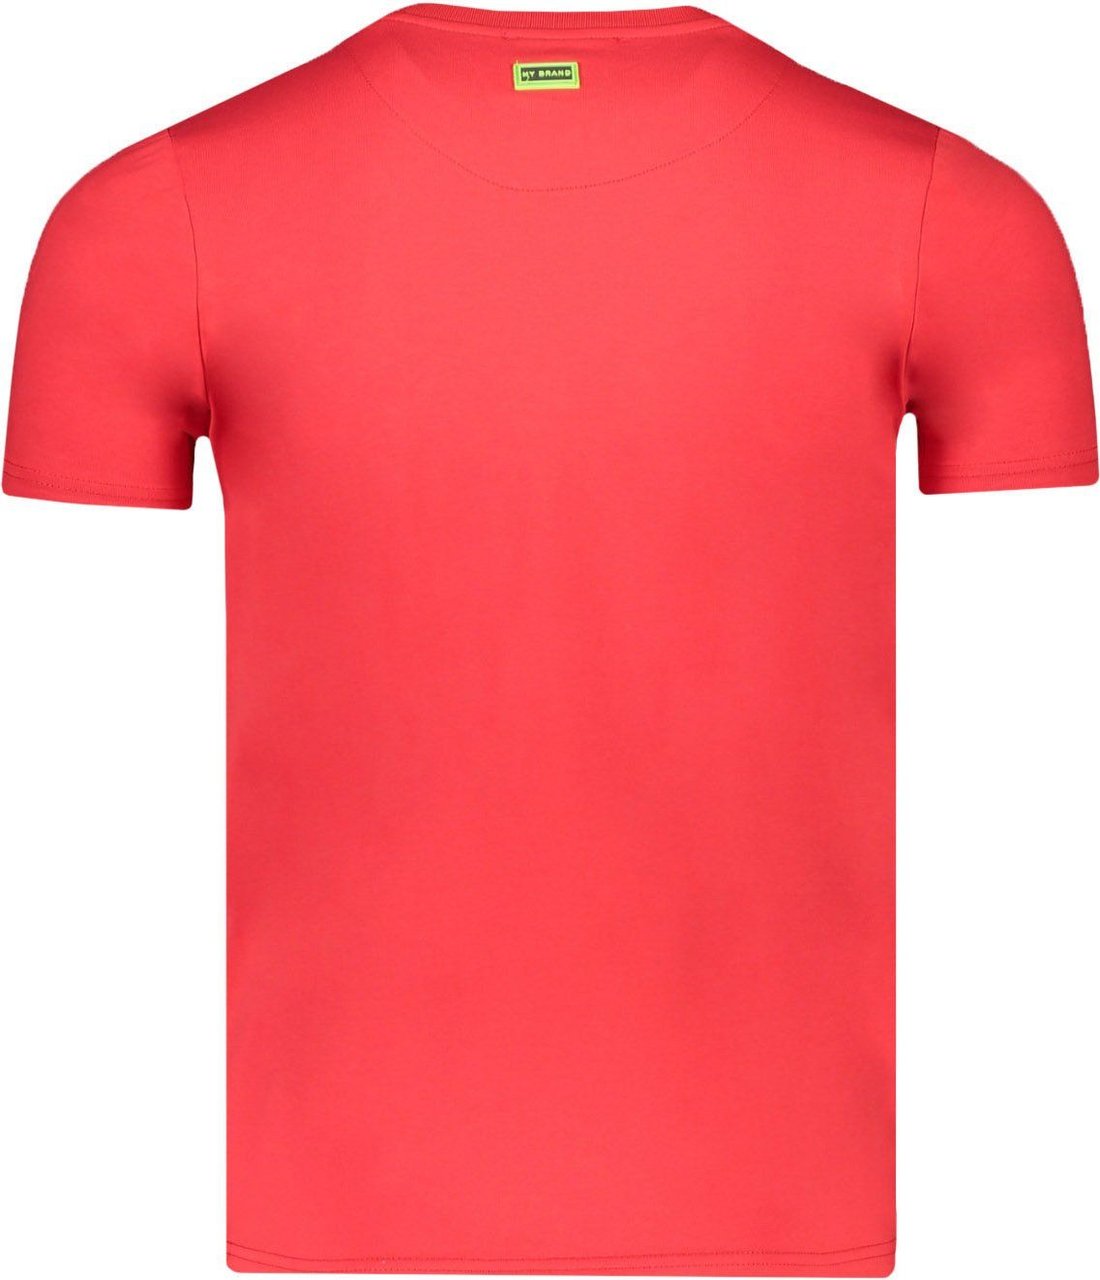 My Brand T-shirt Rood Rood